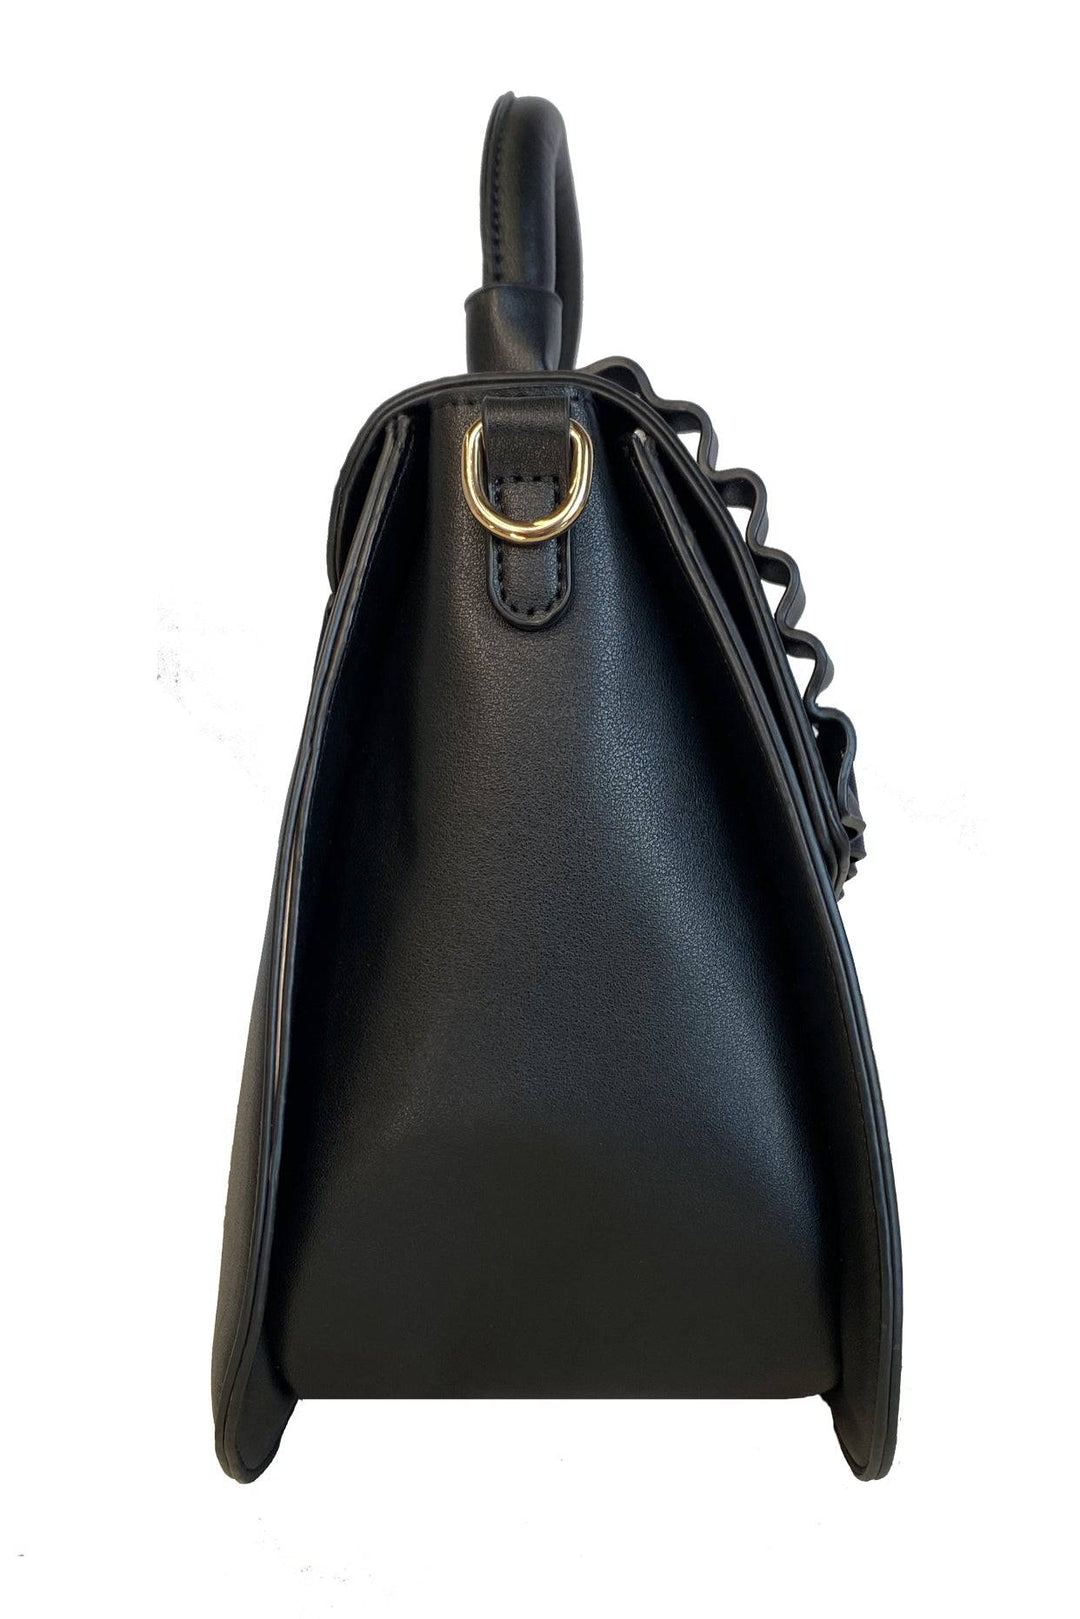 La Parisienne Ruffle Handbag (Black) - Kitten D'Amour